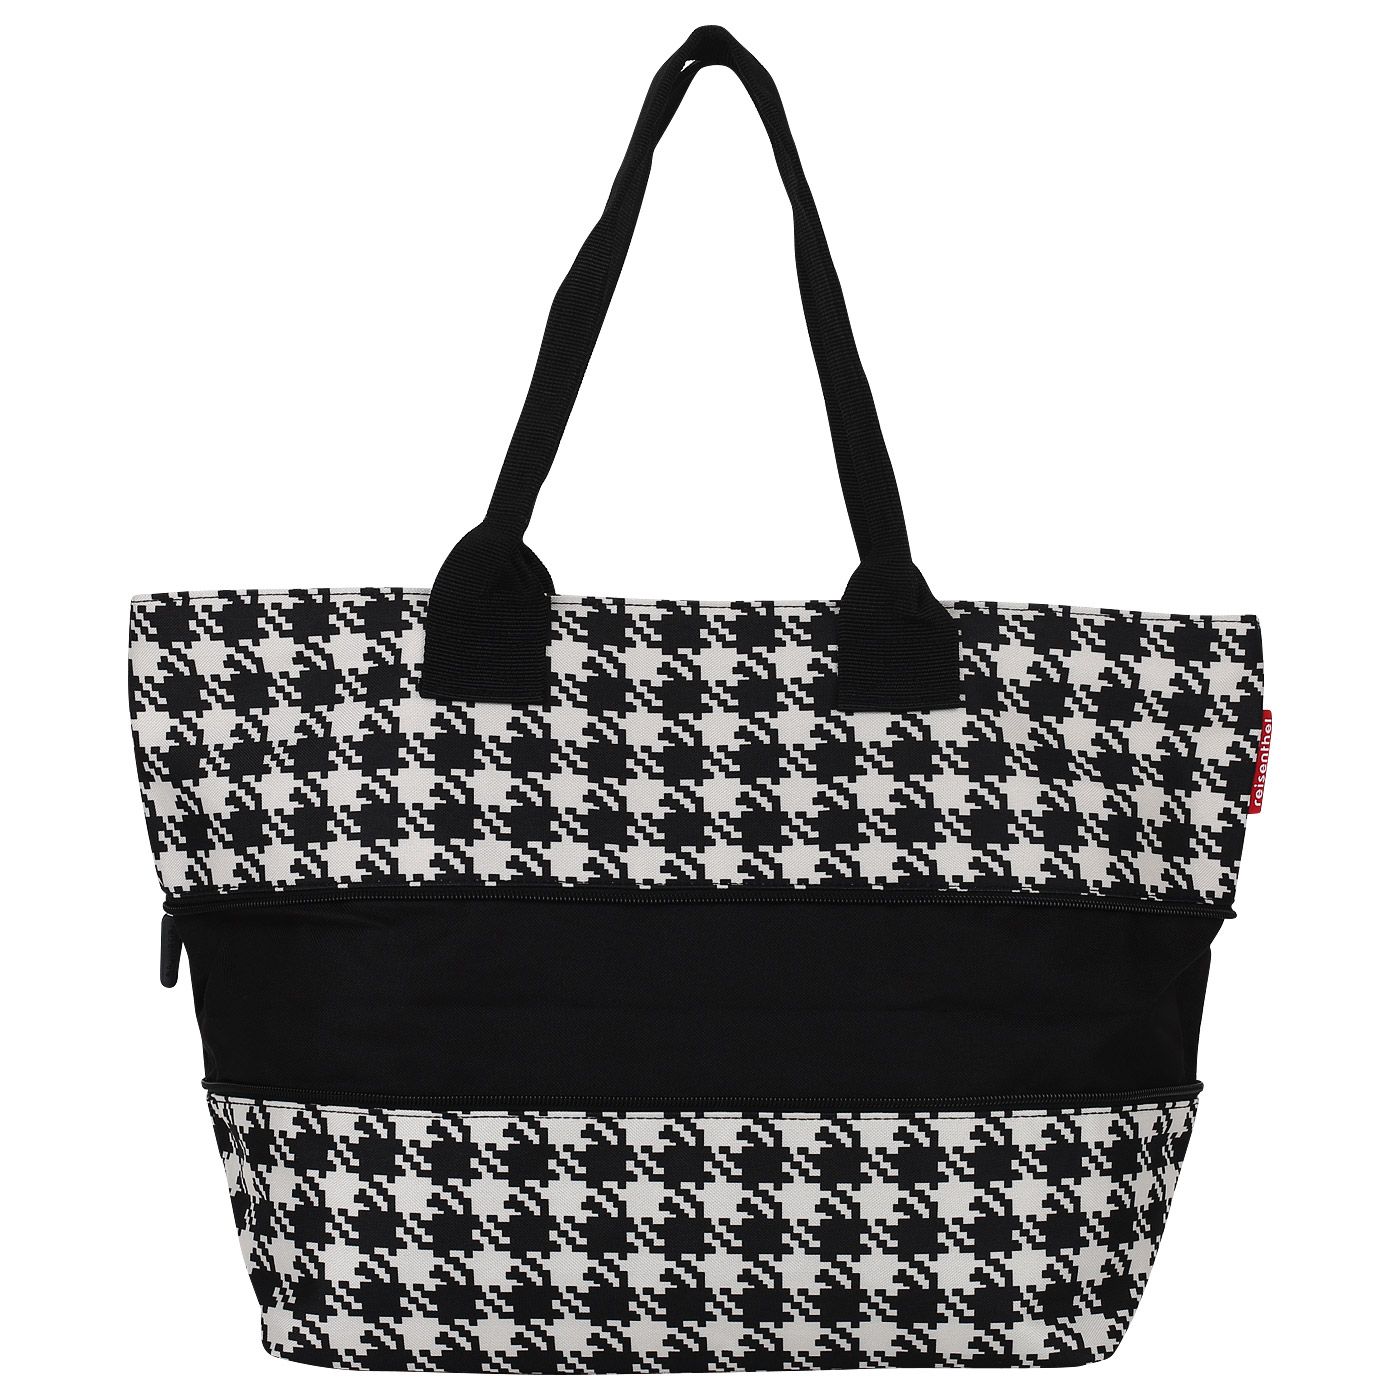 Текстильная сумка с увеличением объема Reisenthel Shopper E1